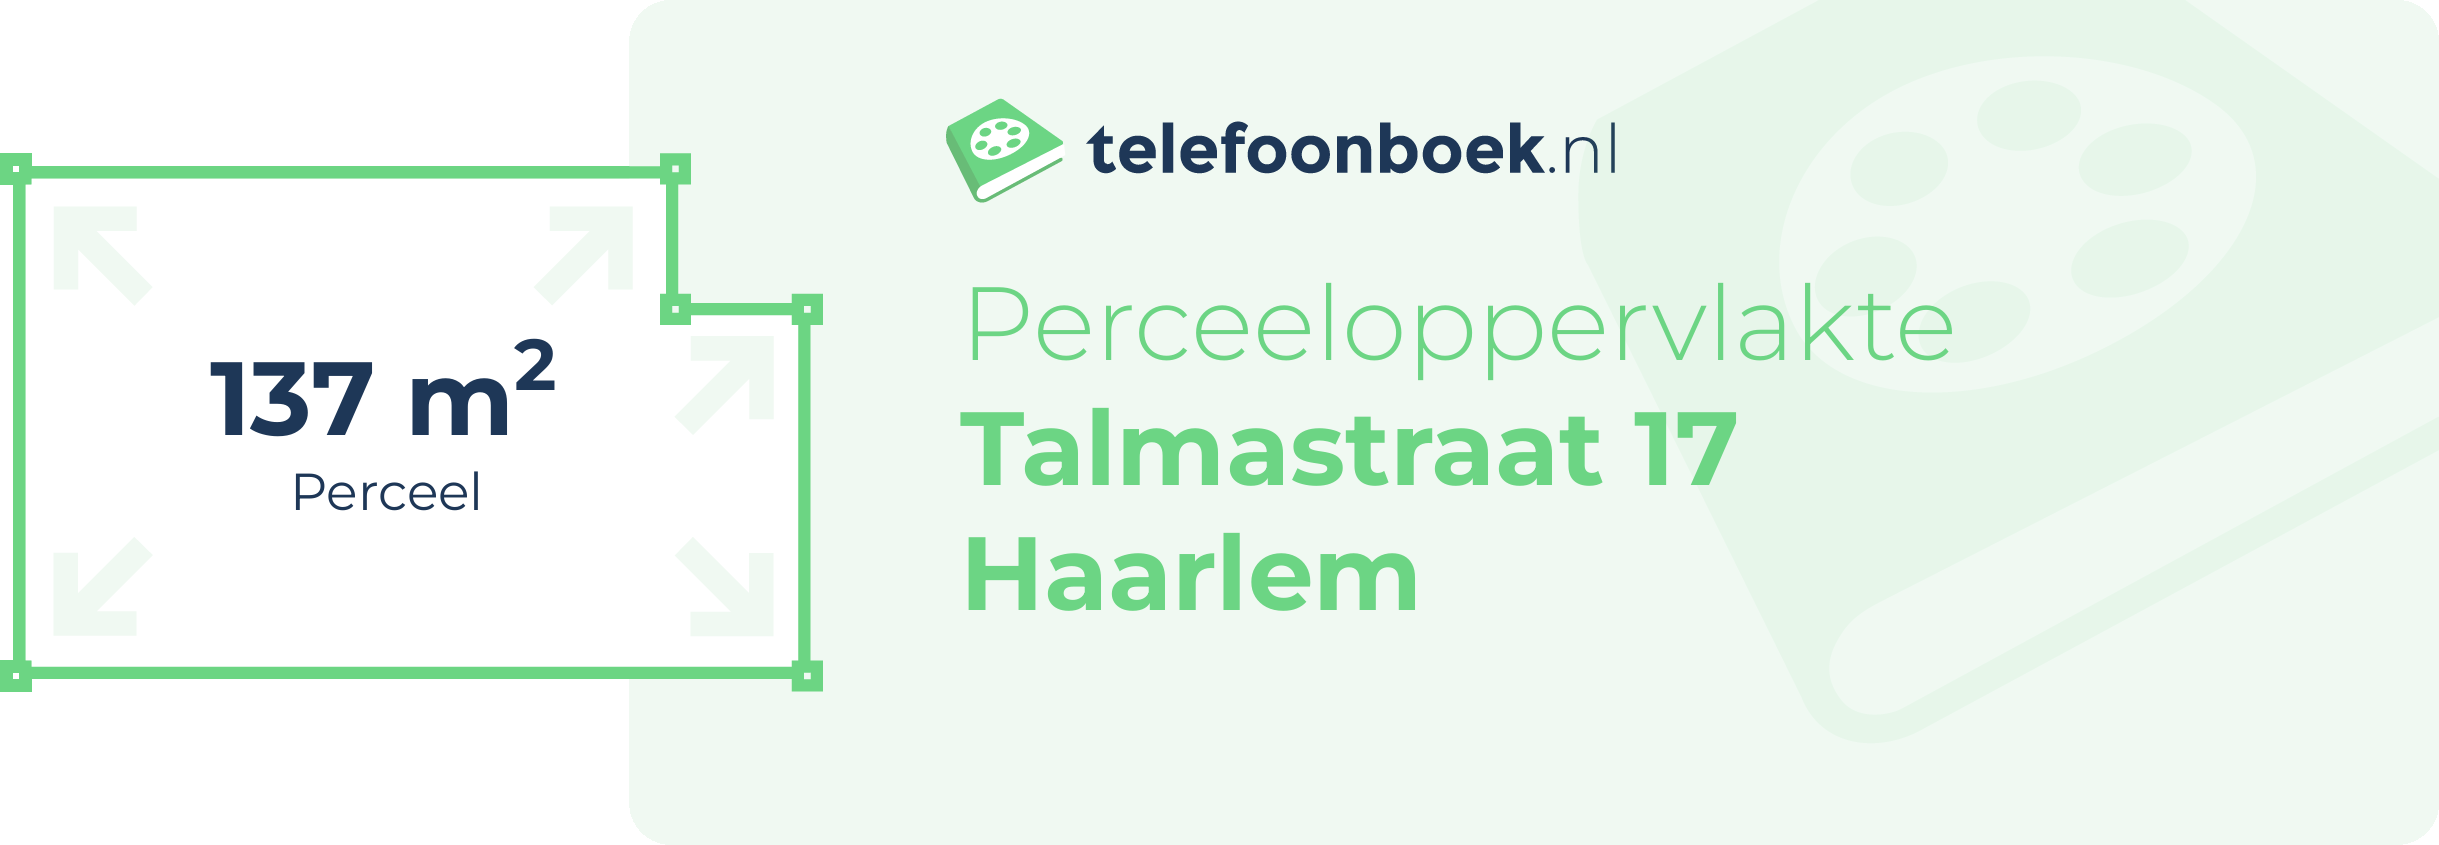 Perceeloppervlakte Talmastraat 17 Haarlem